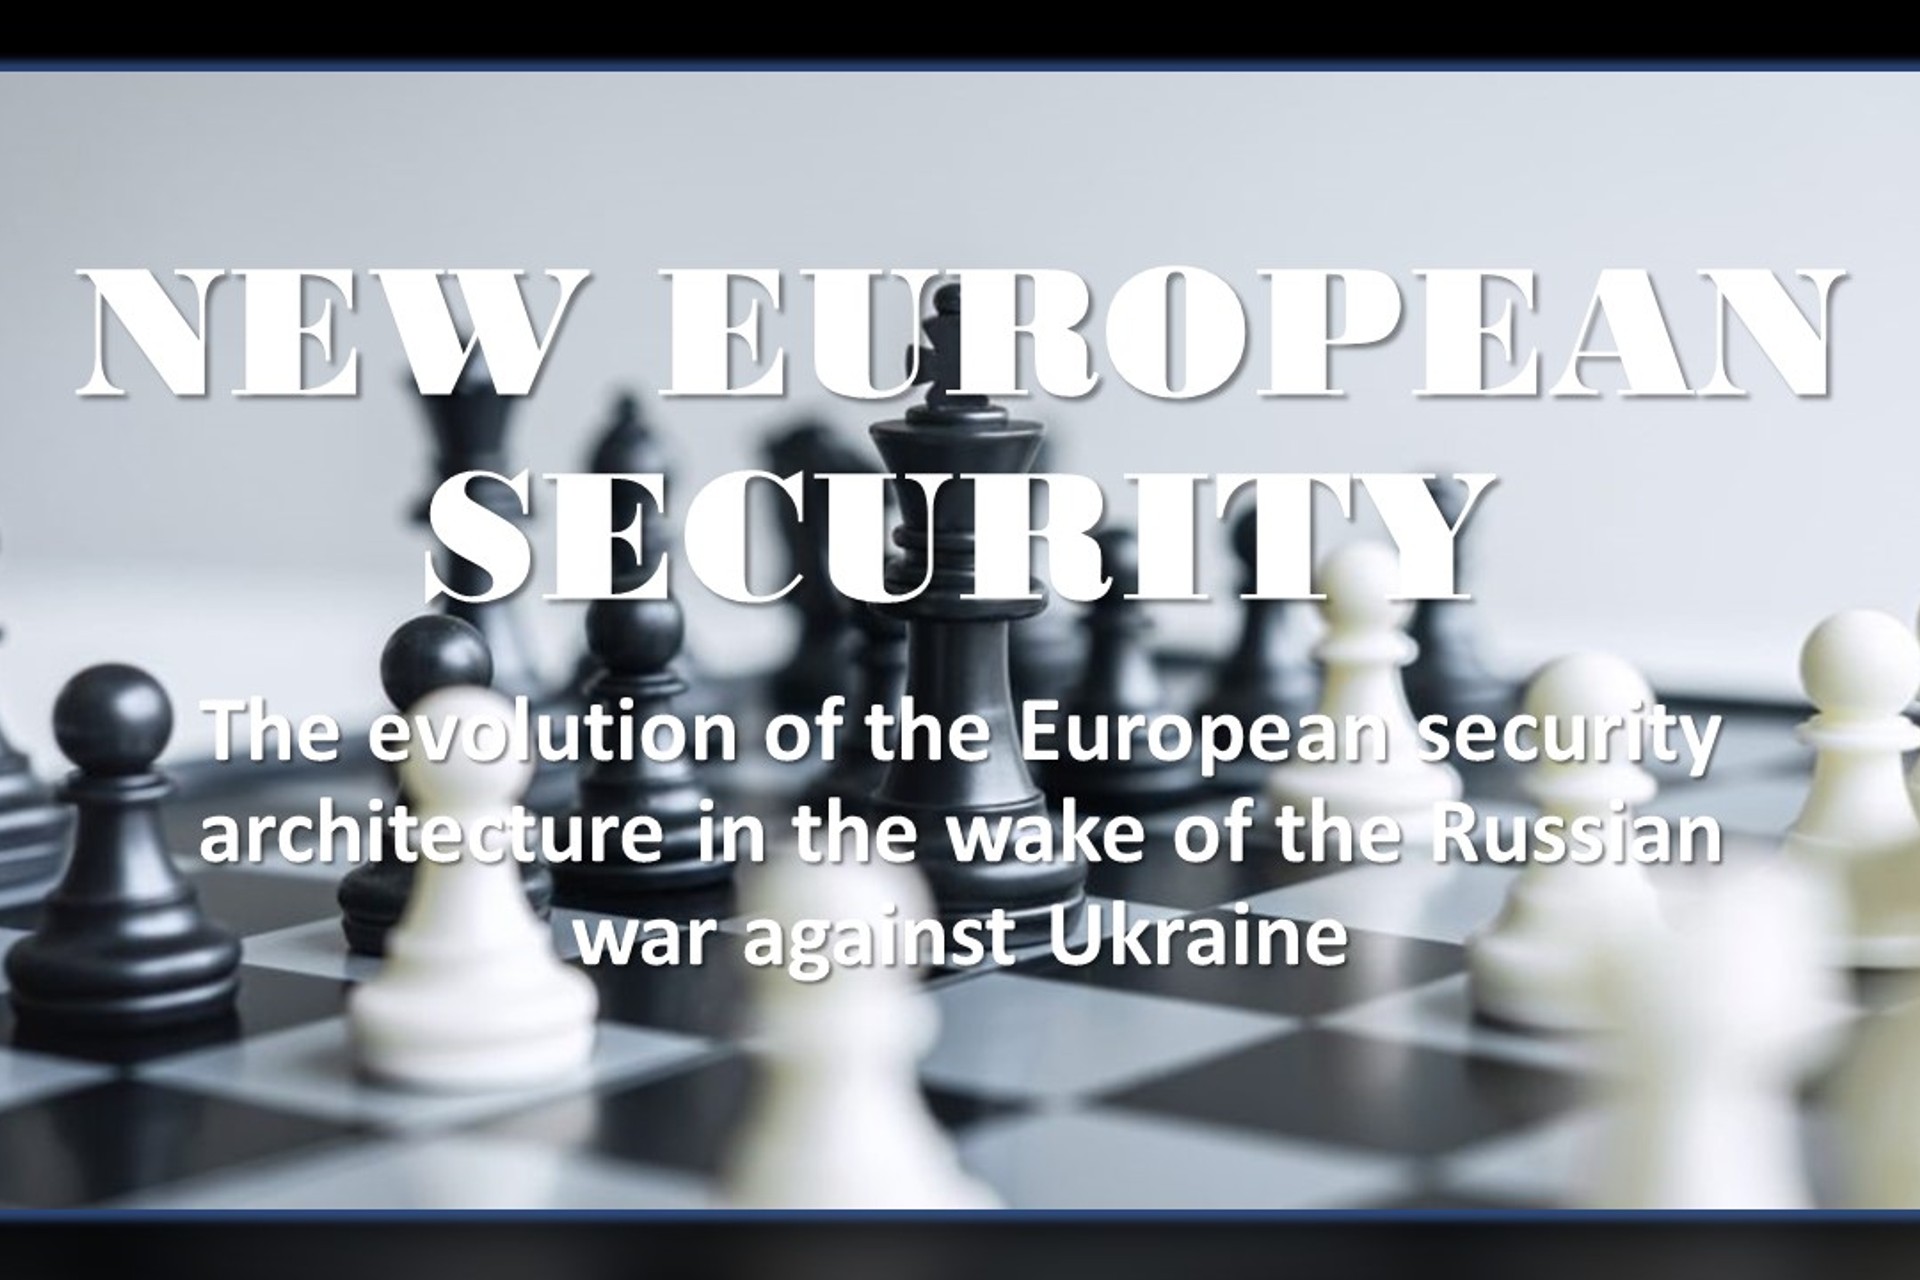 NEW EUROPEAN SECURITY-The evolution of the European security architecture in the wake of the Russian war against Ukraine